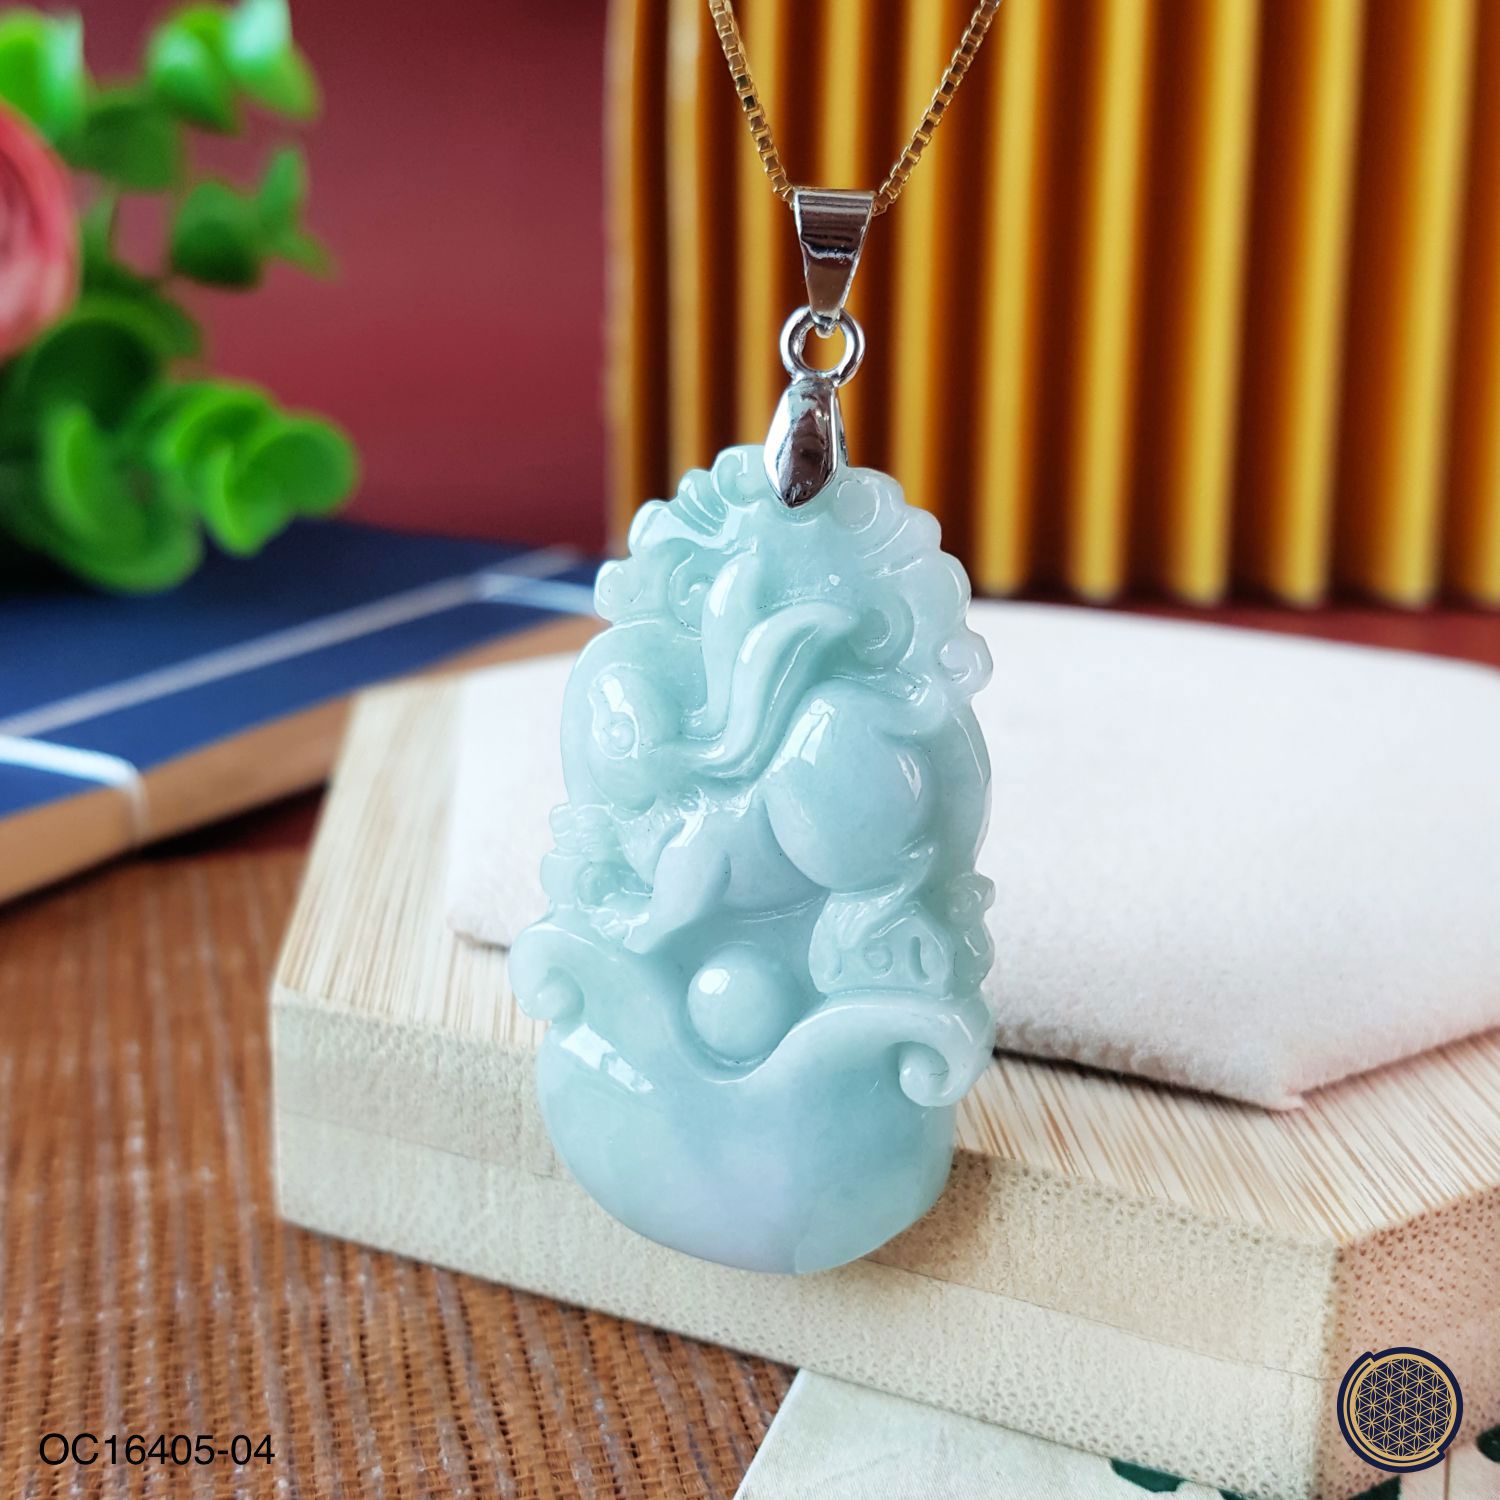 24mm x 50mm You Qing Jade  Chinese Zodiac Pendant - Rabbit 